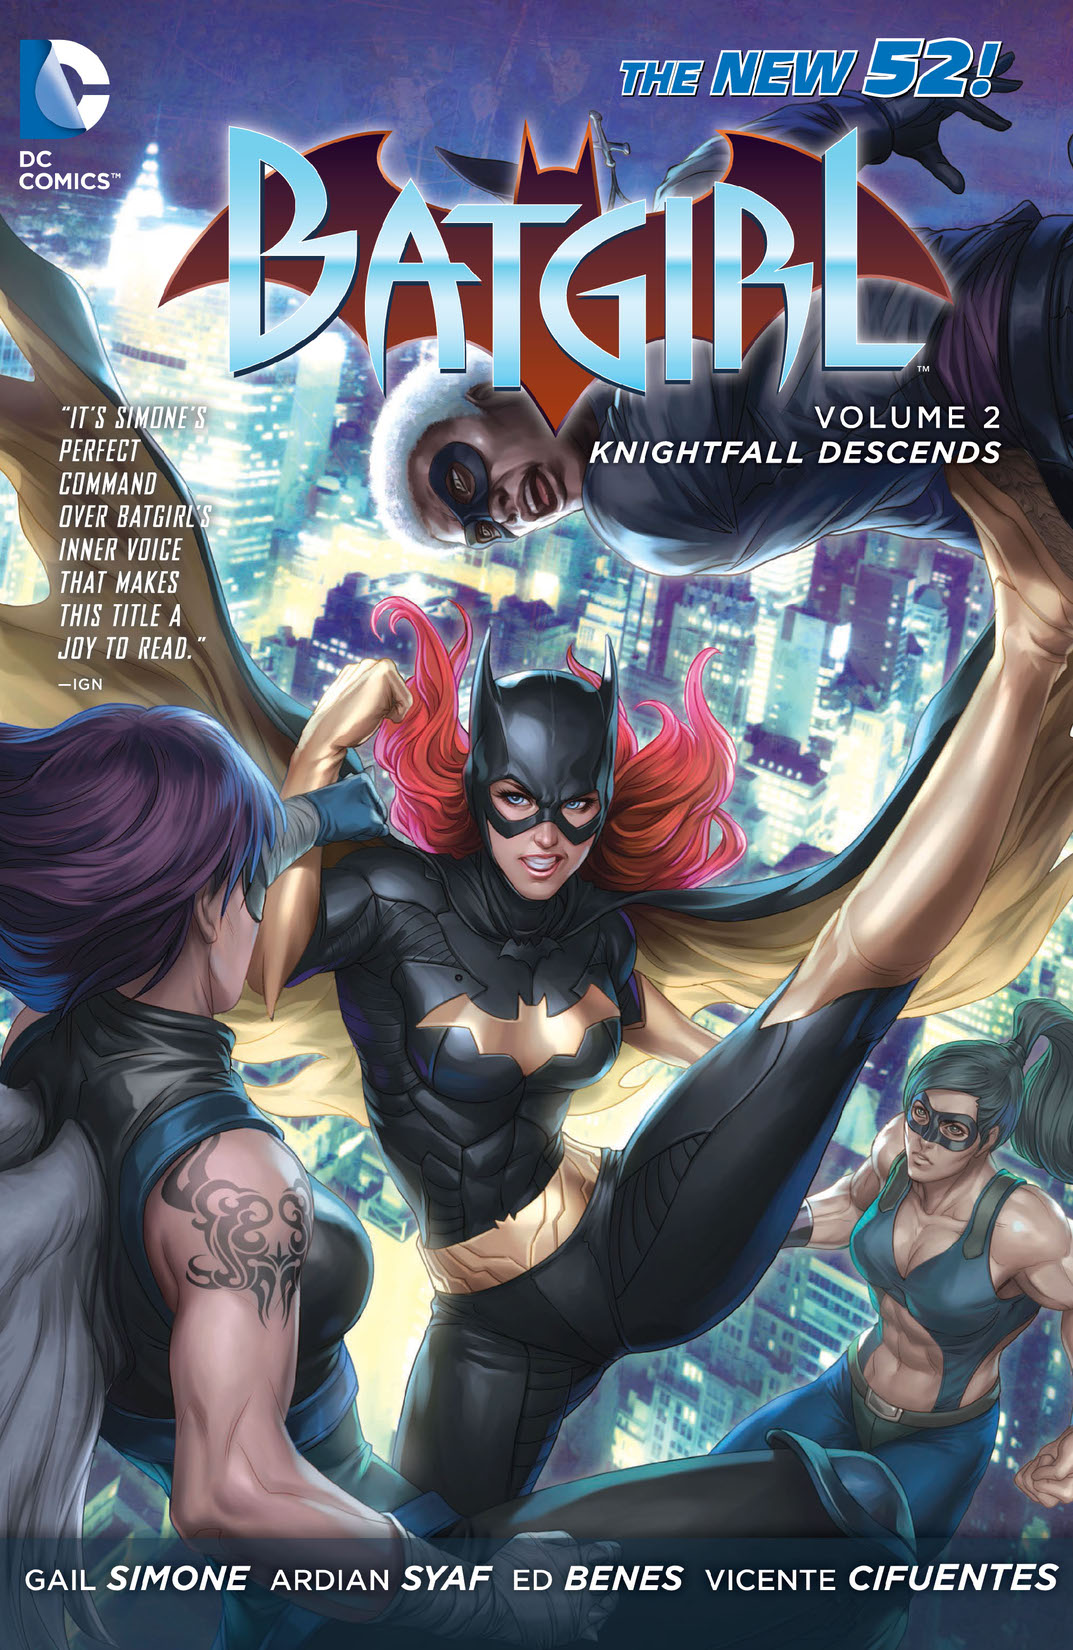 Batgirl Vol. 2: Knightfall Descends preview images